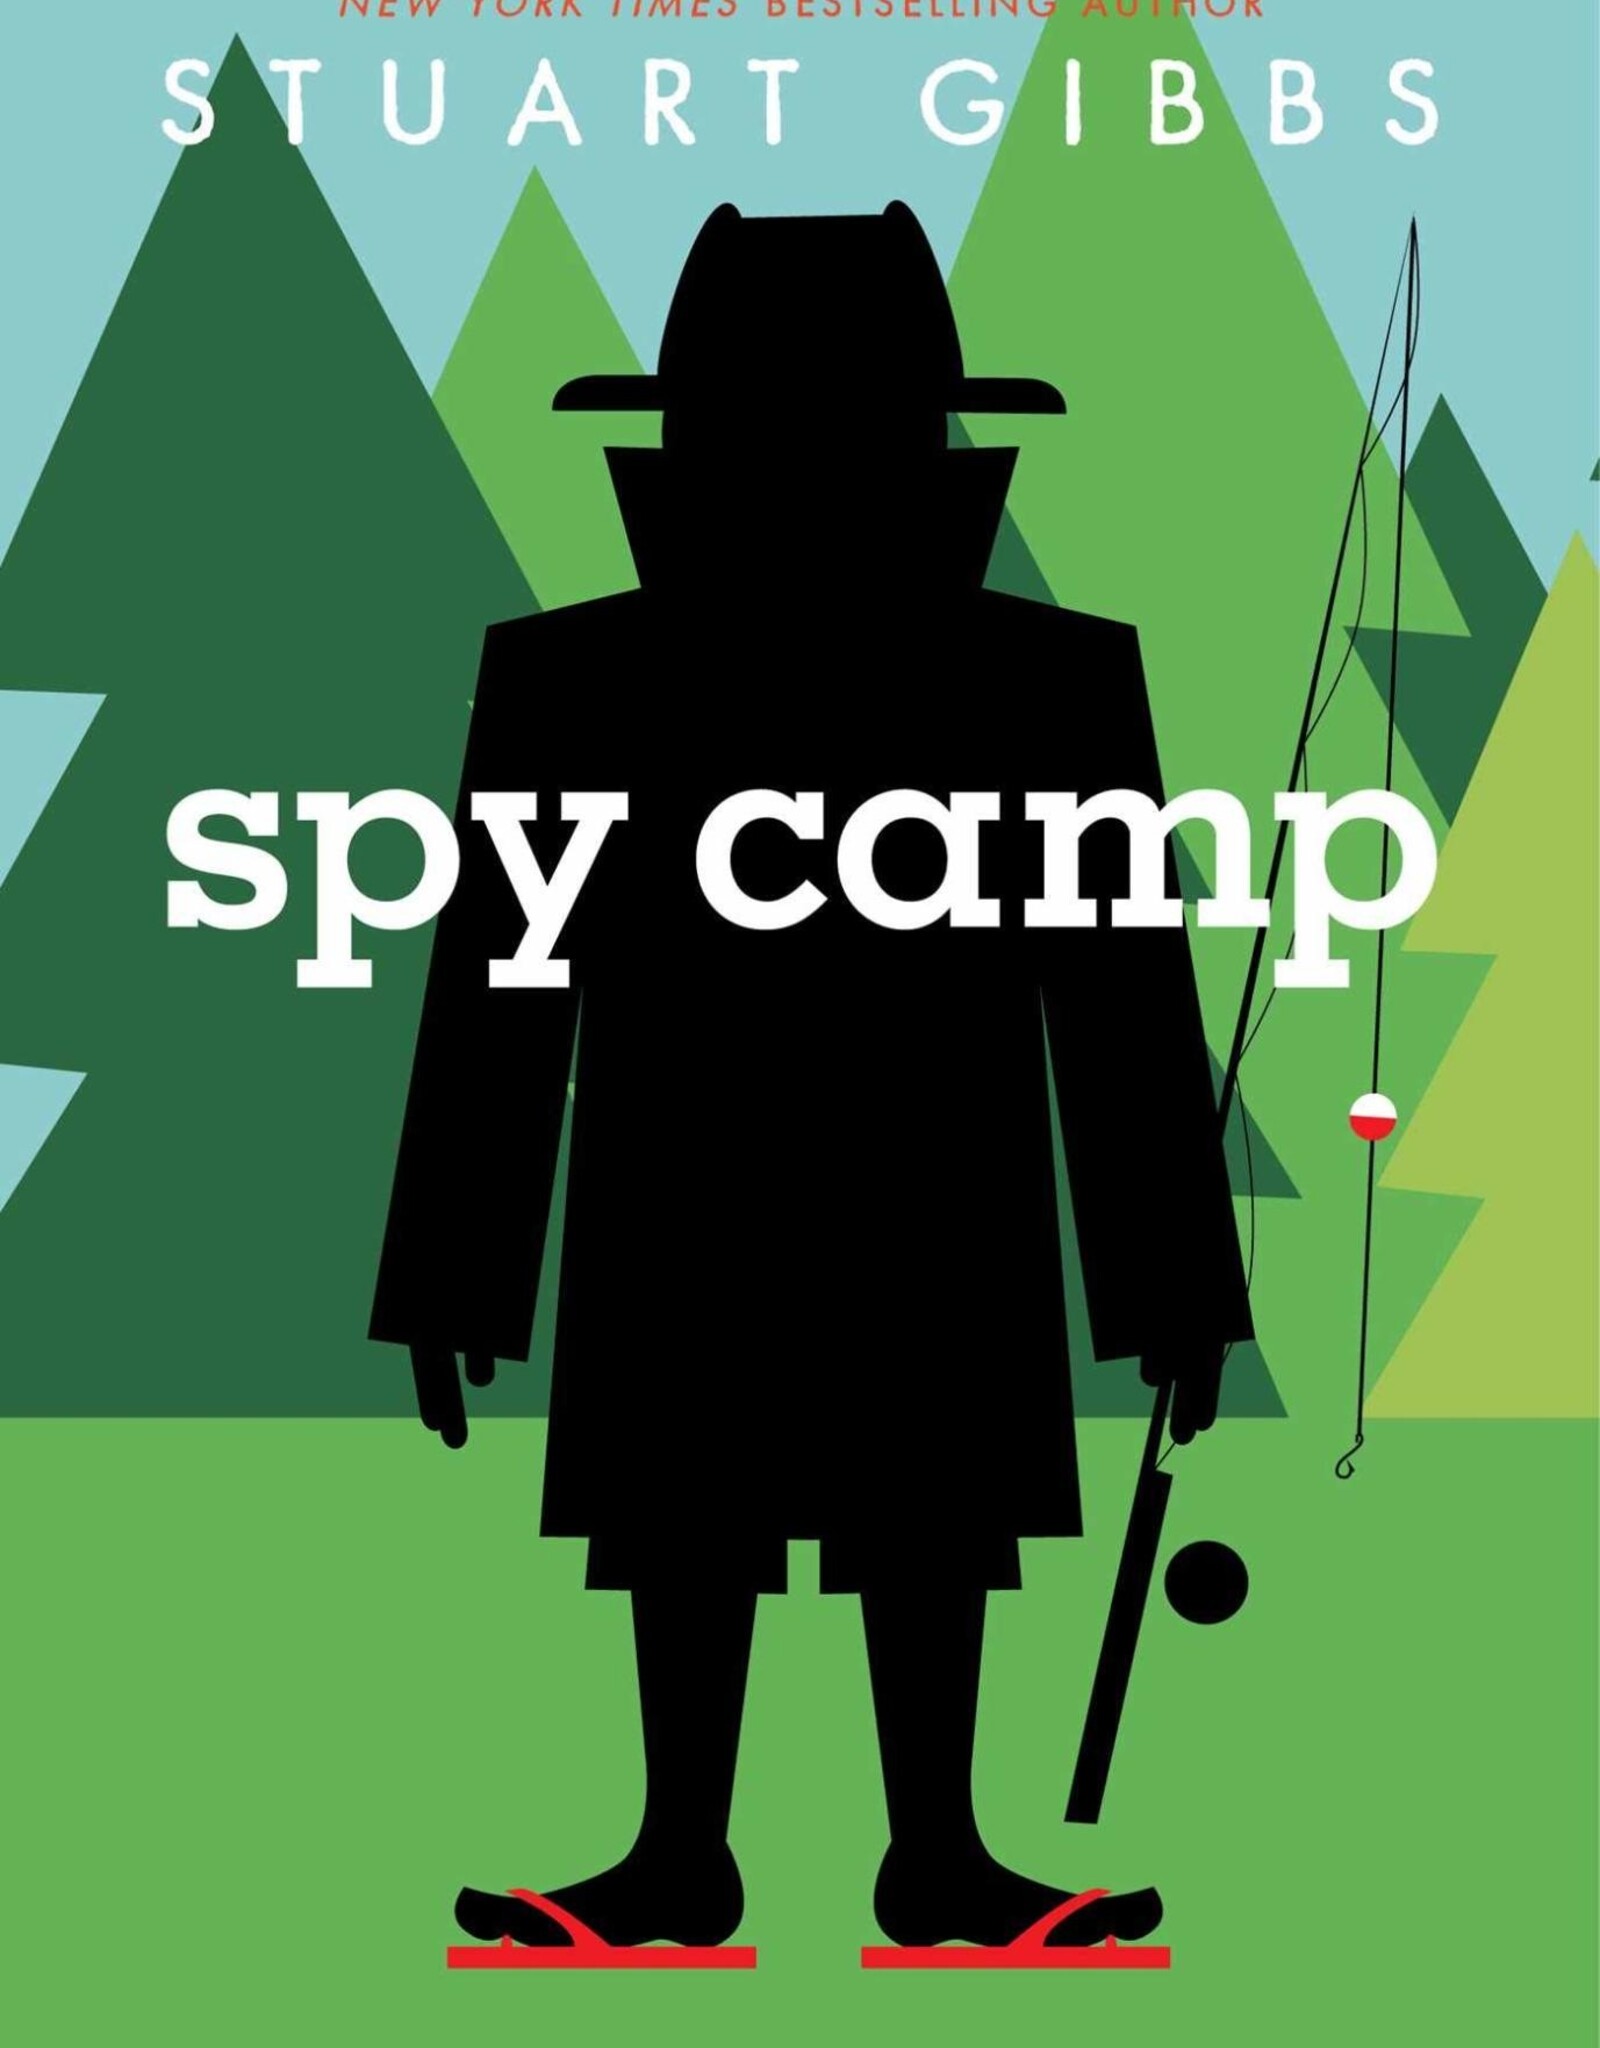 Simon & Schuster Spy Camp